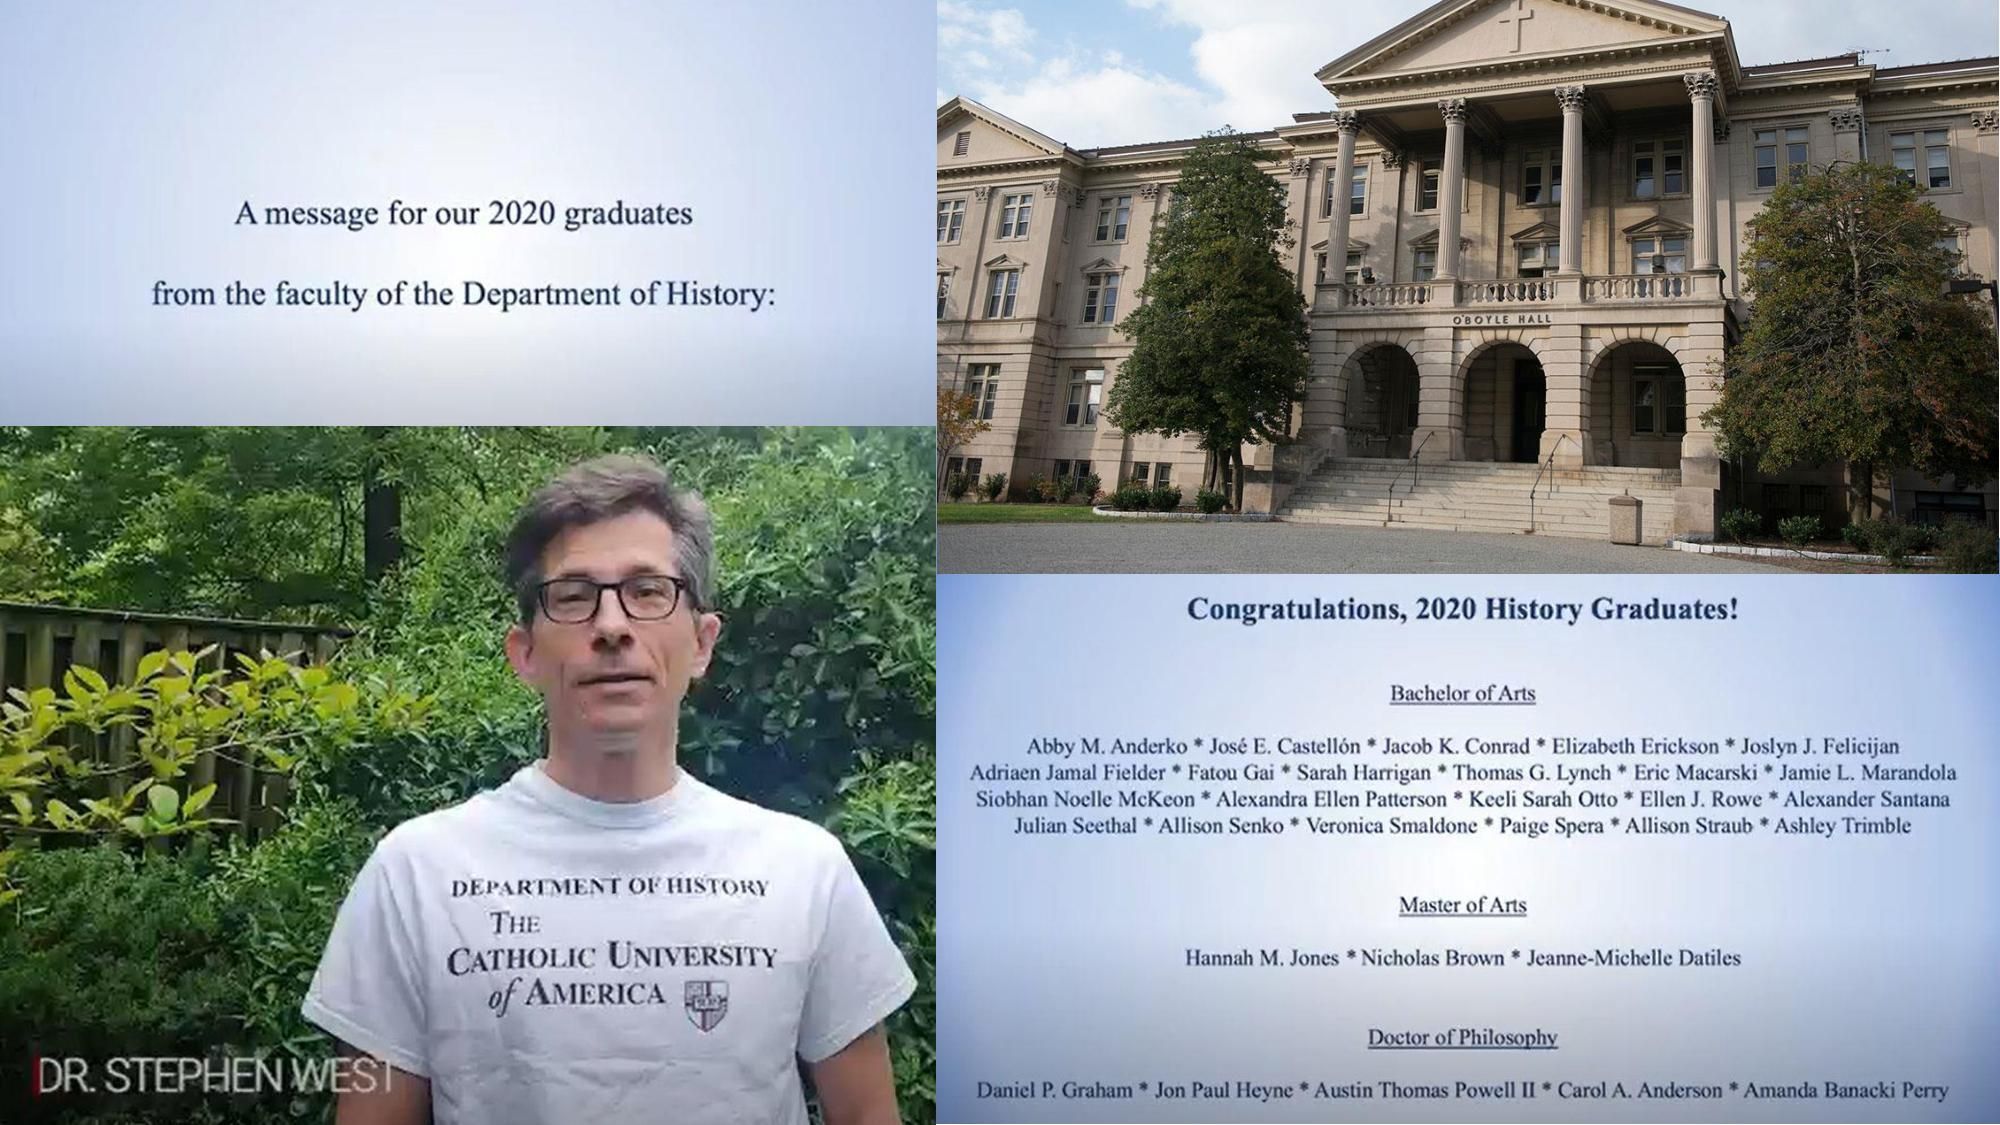 Congratulations to 2020 history graduates